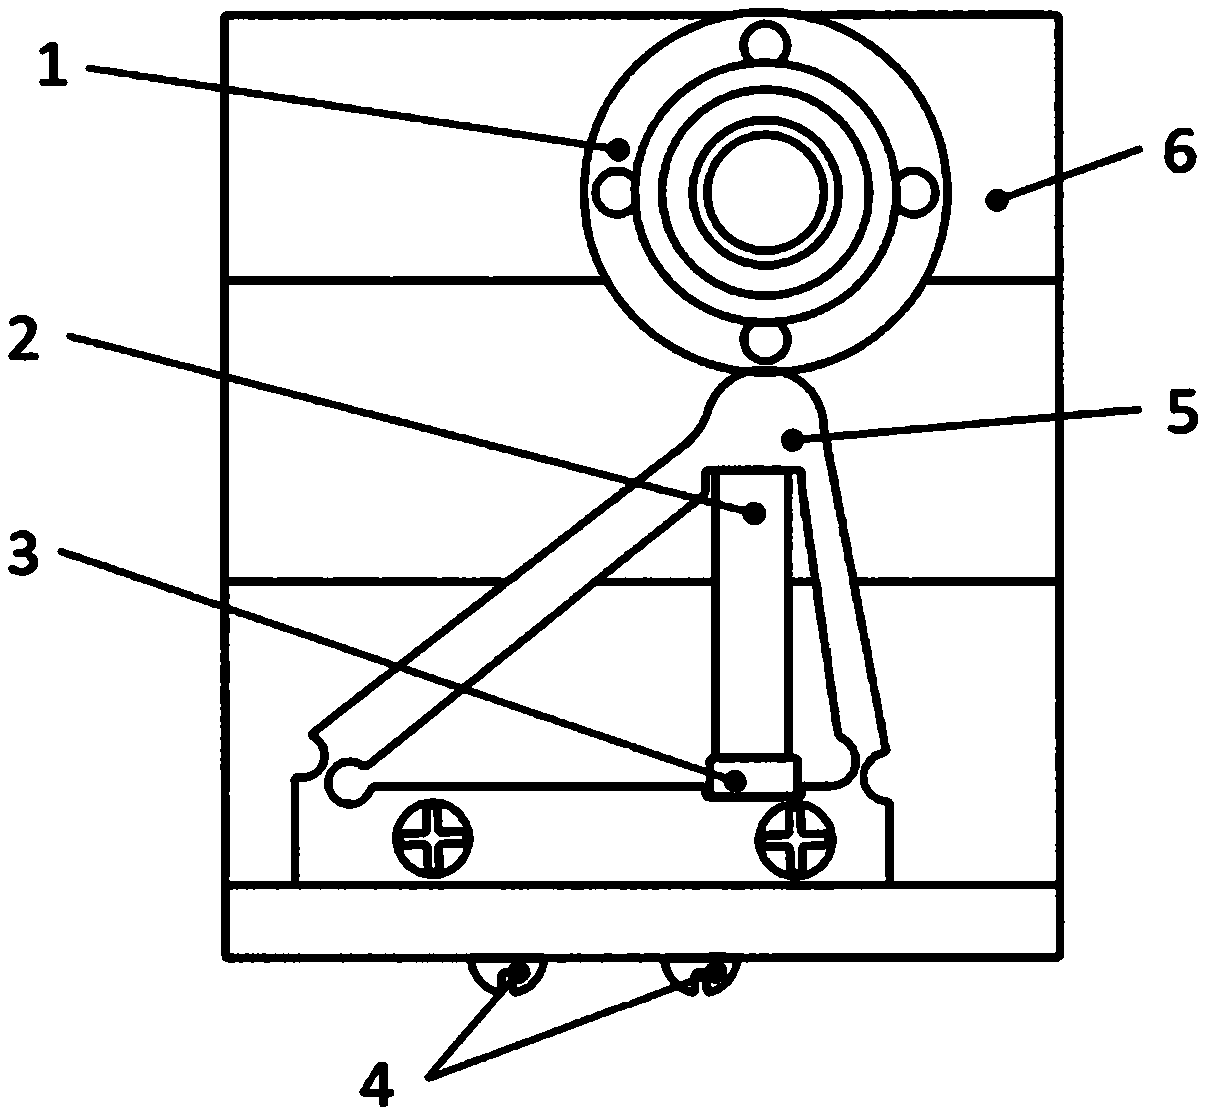 Rotary piezoelectric driving device based on asymmetric triangular hinge mechanism